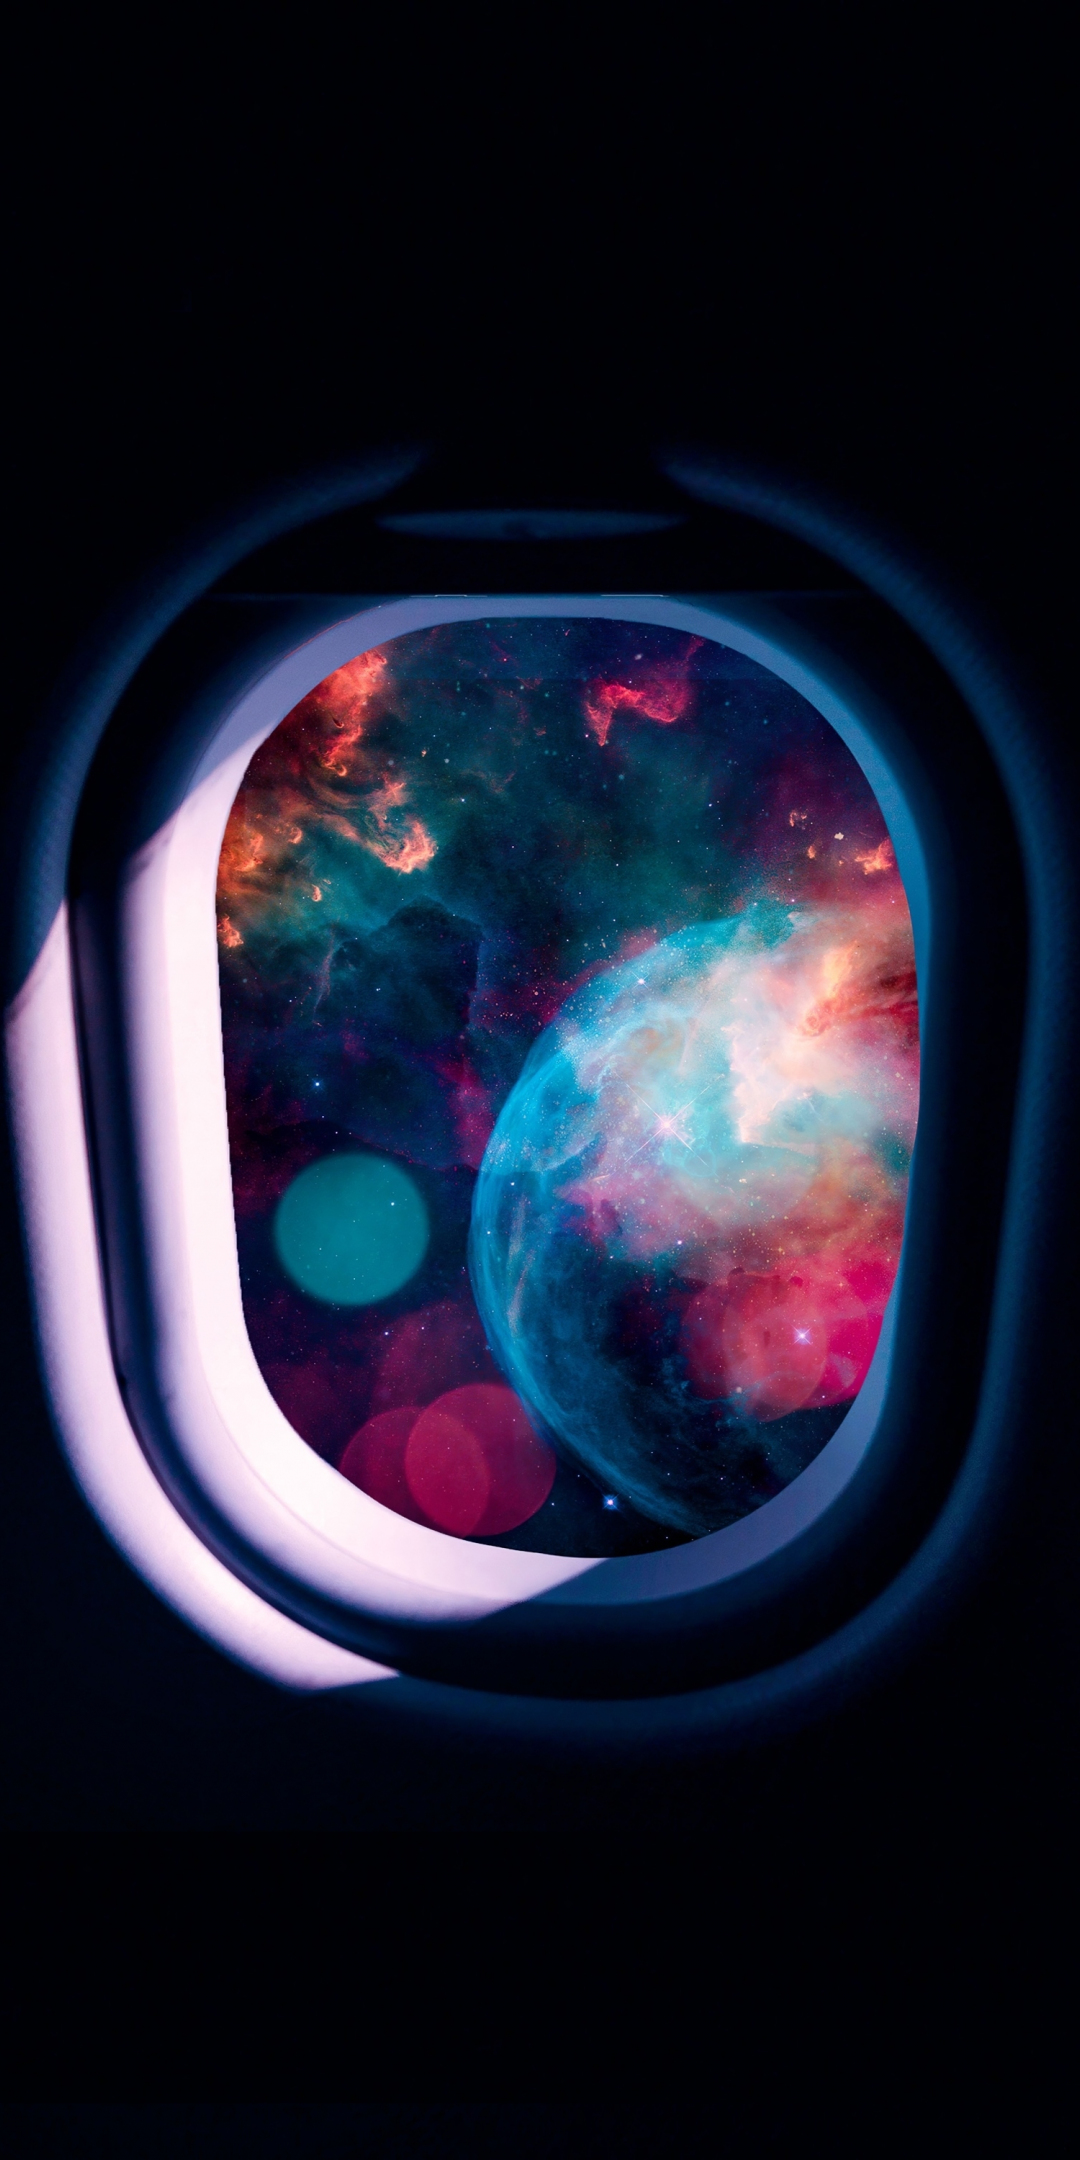 Spacecraft's window, into space, dark, 1080x2160 wallpaper